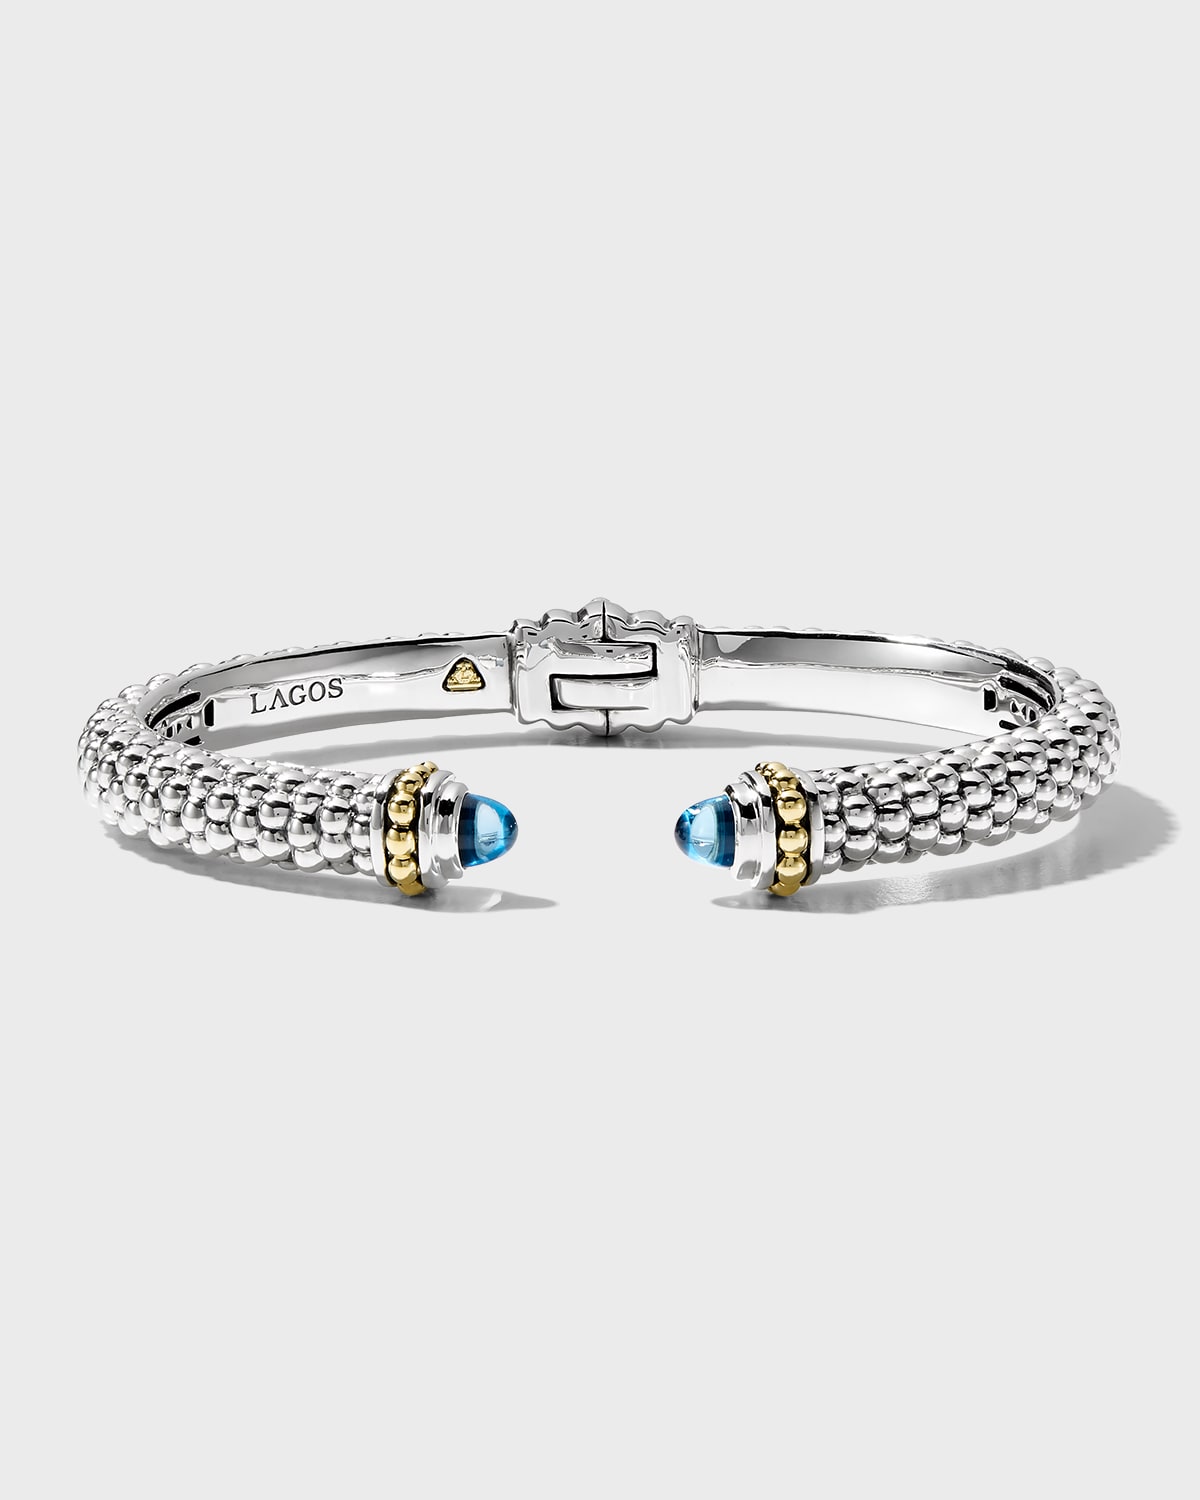 8mm Sterling Silver Caviar Hinge Cuff Bracelet